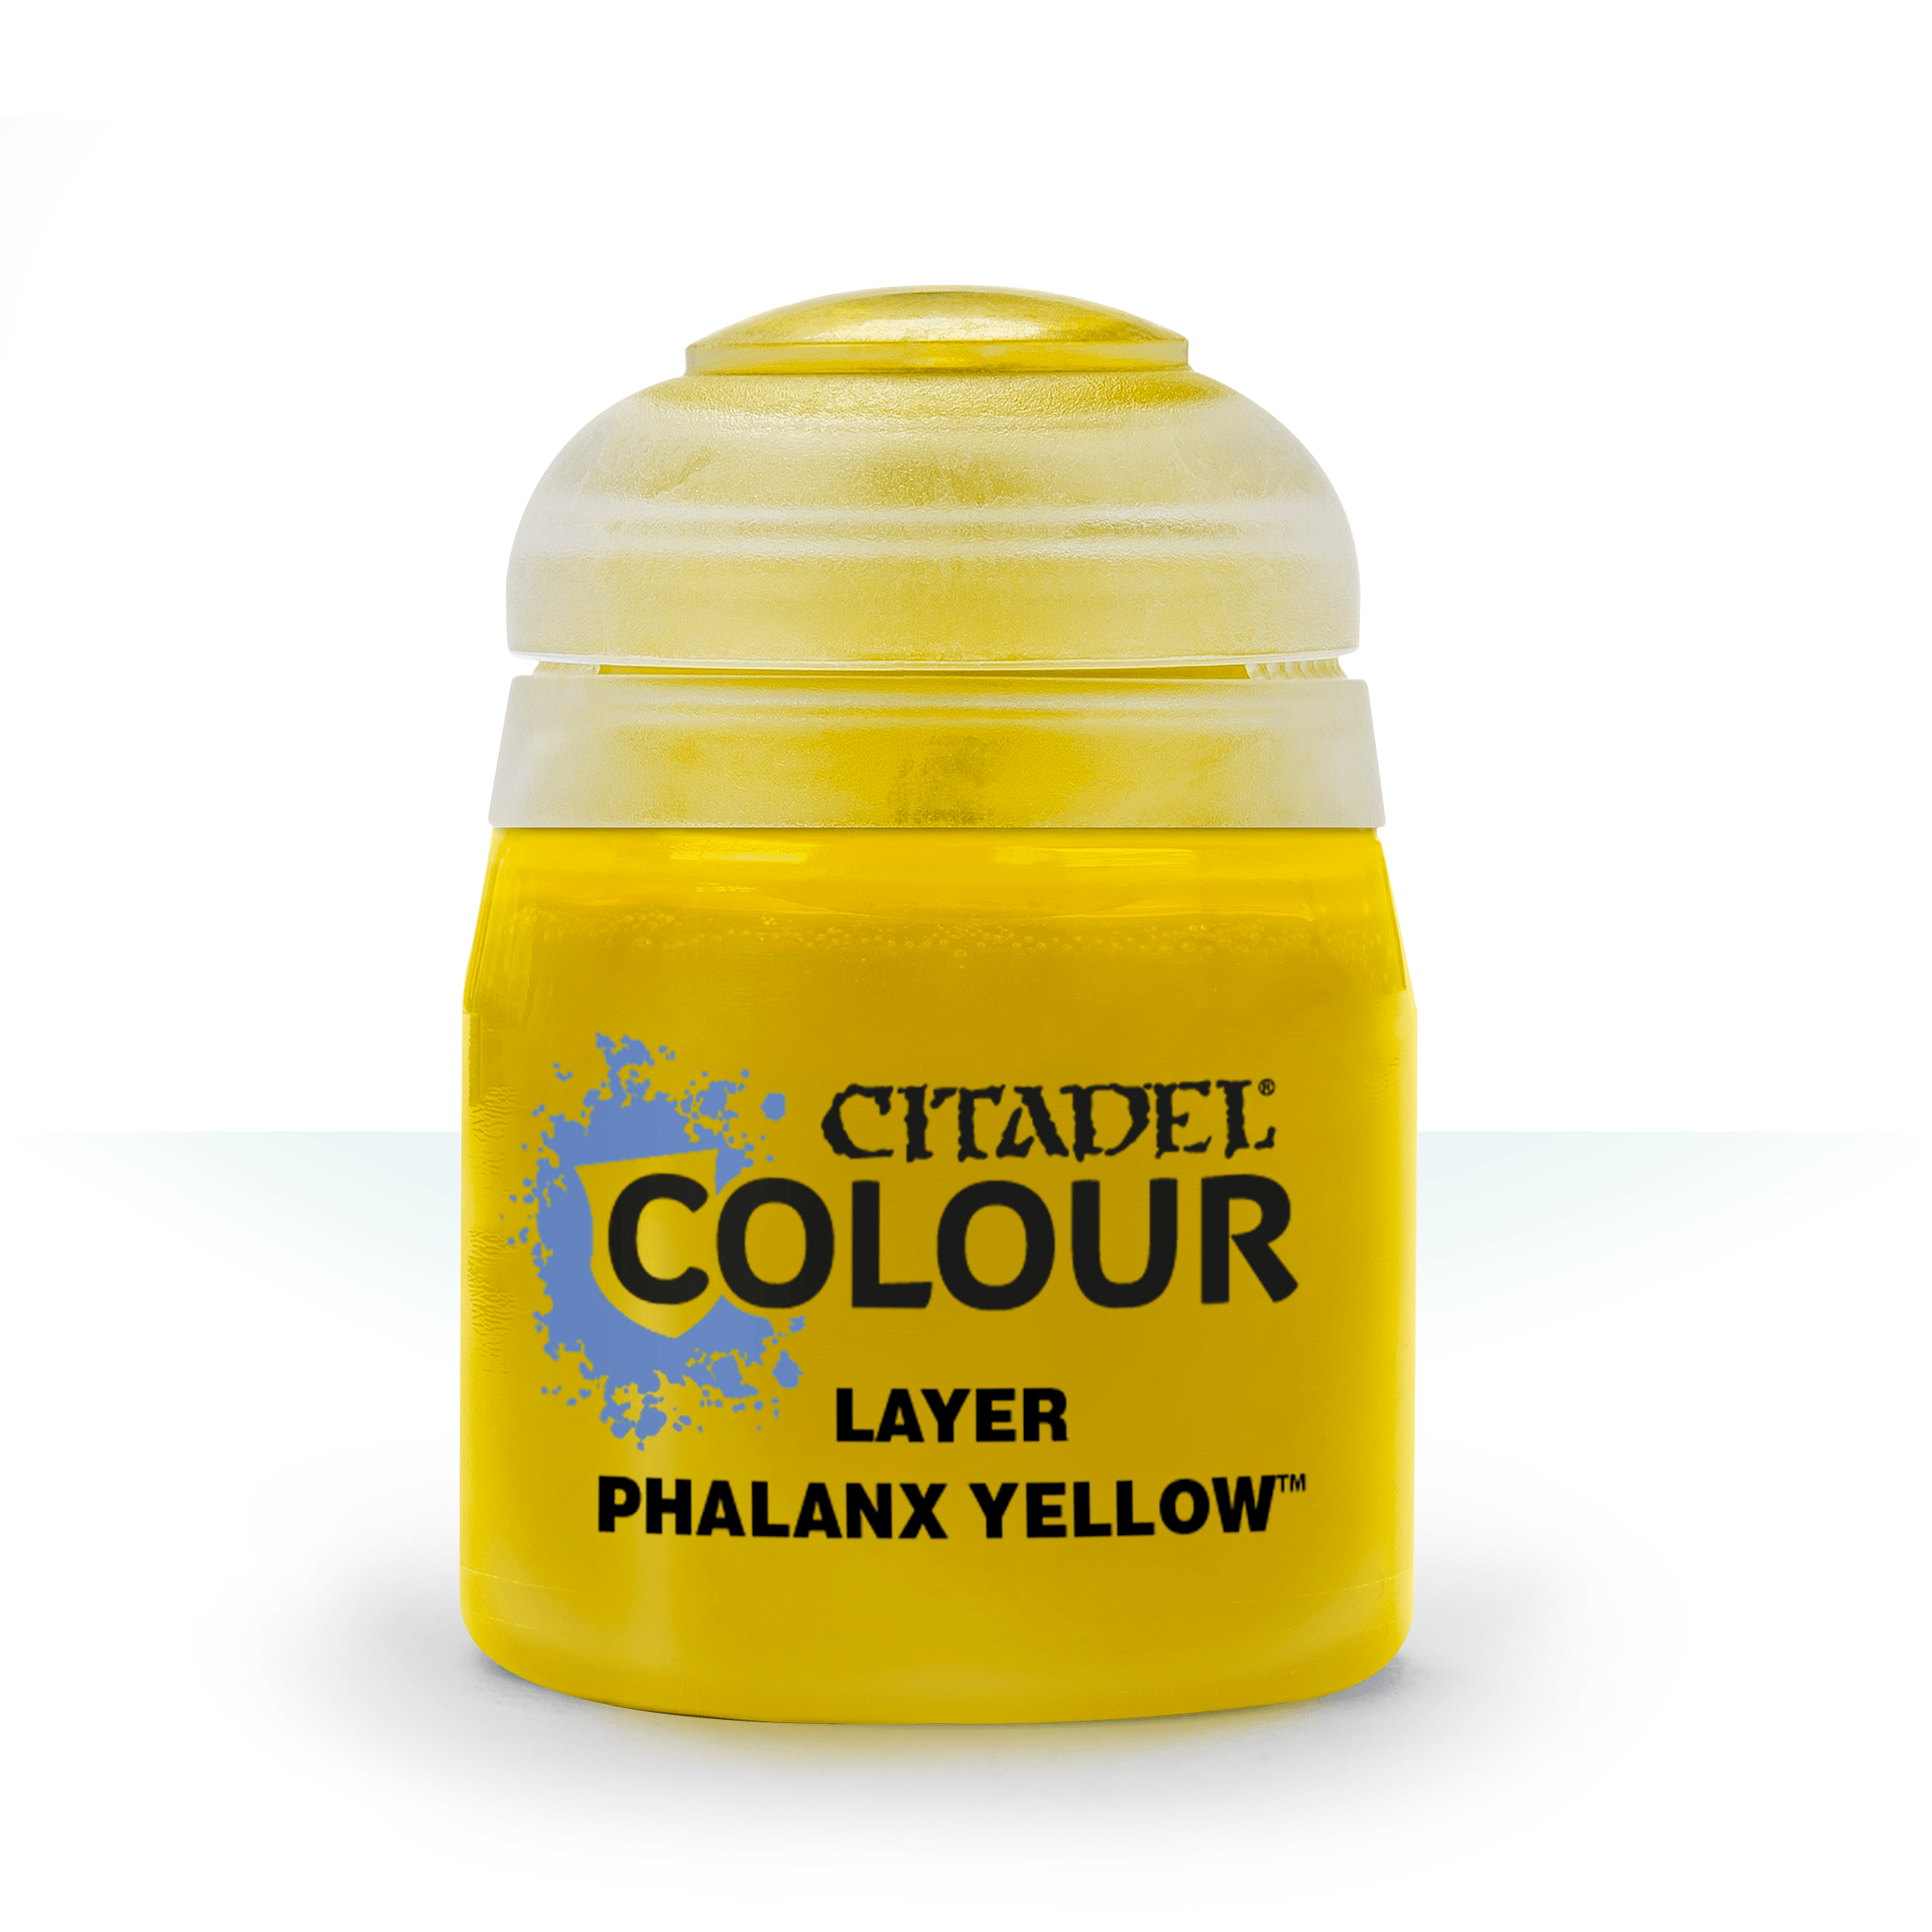 Layer Phalanx Yellow - Citadel Colour